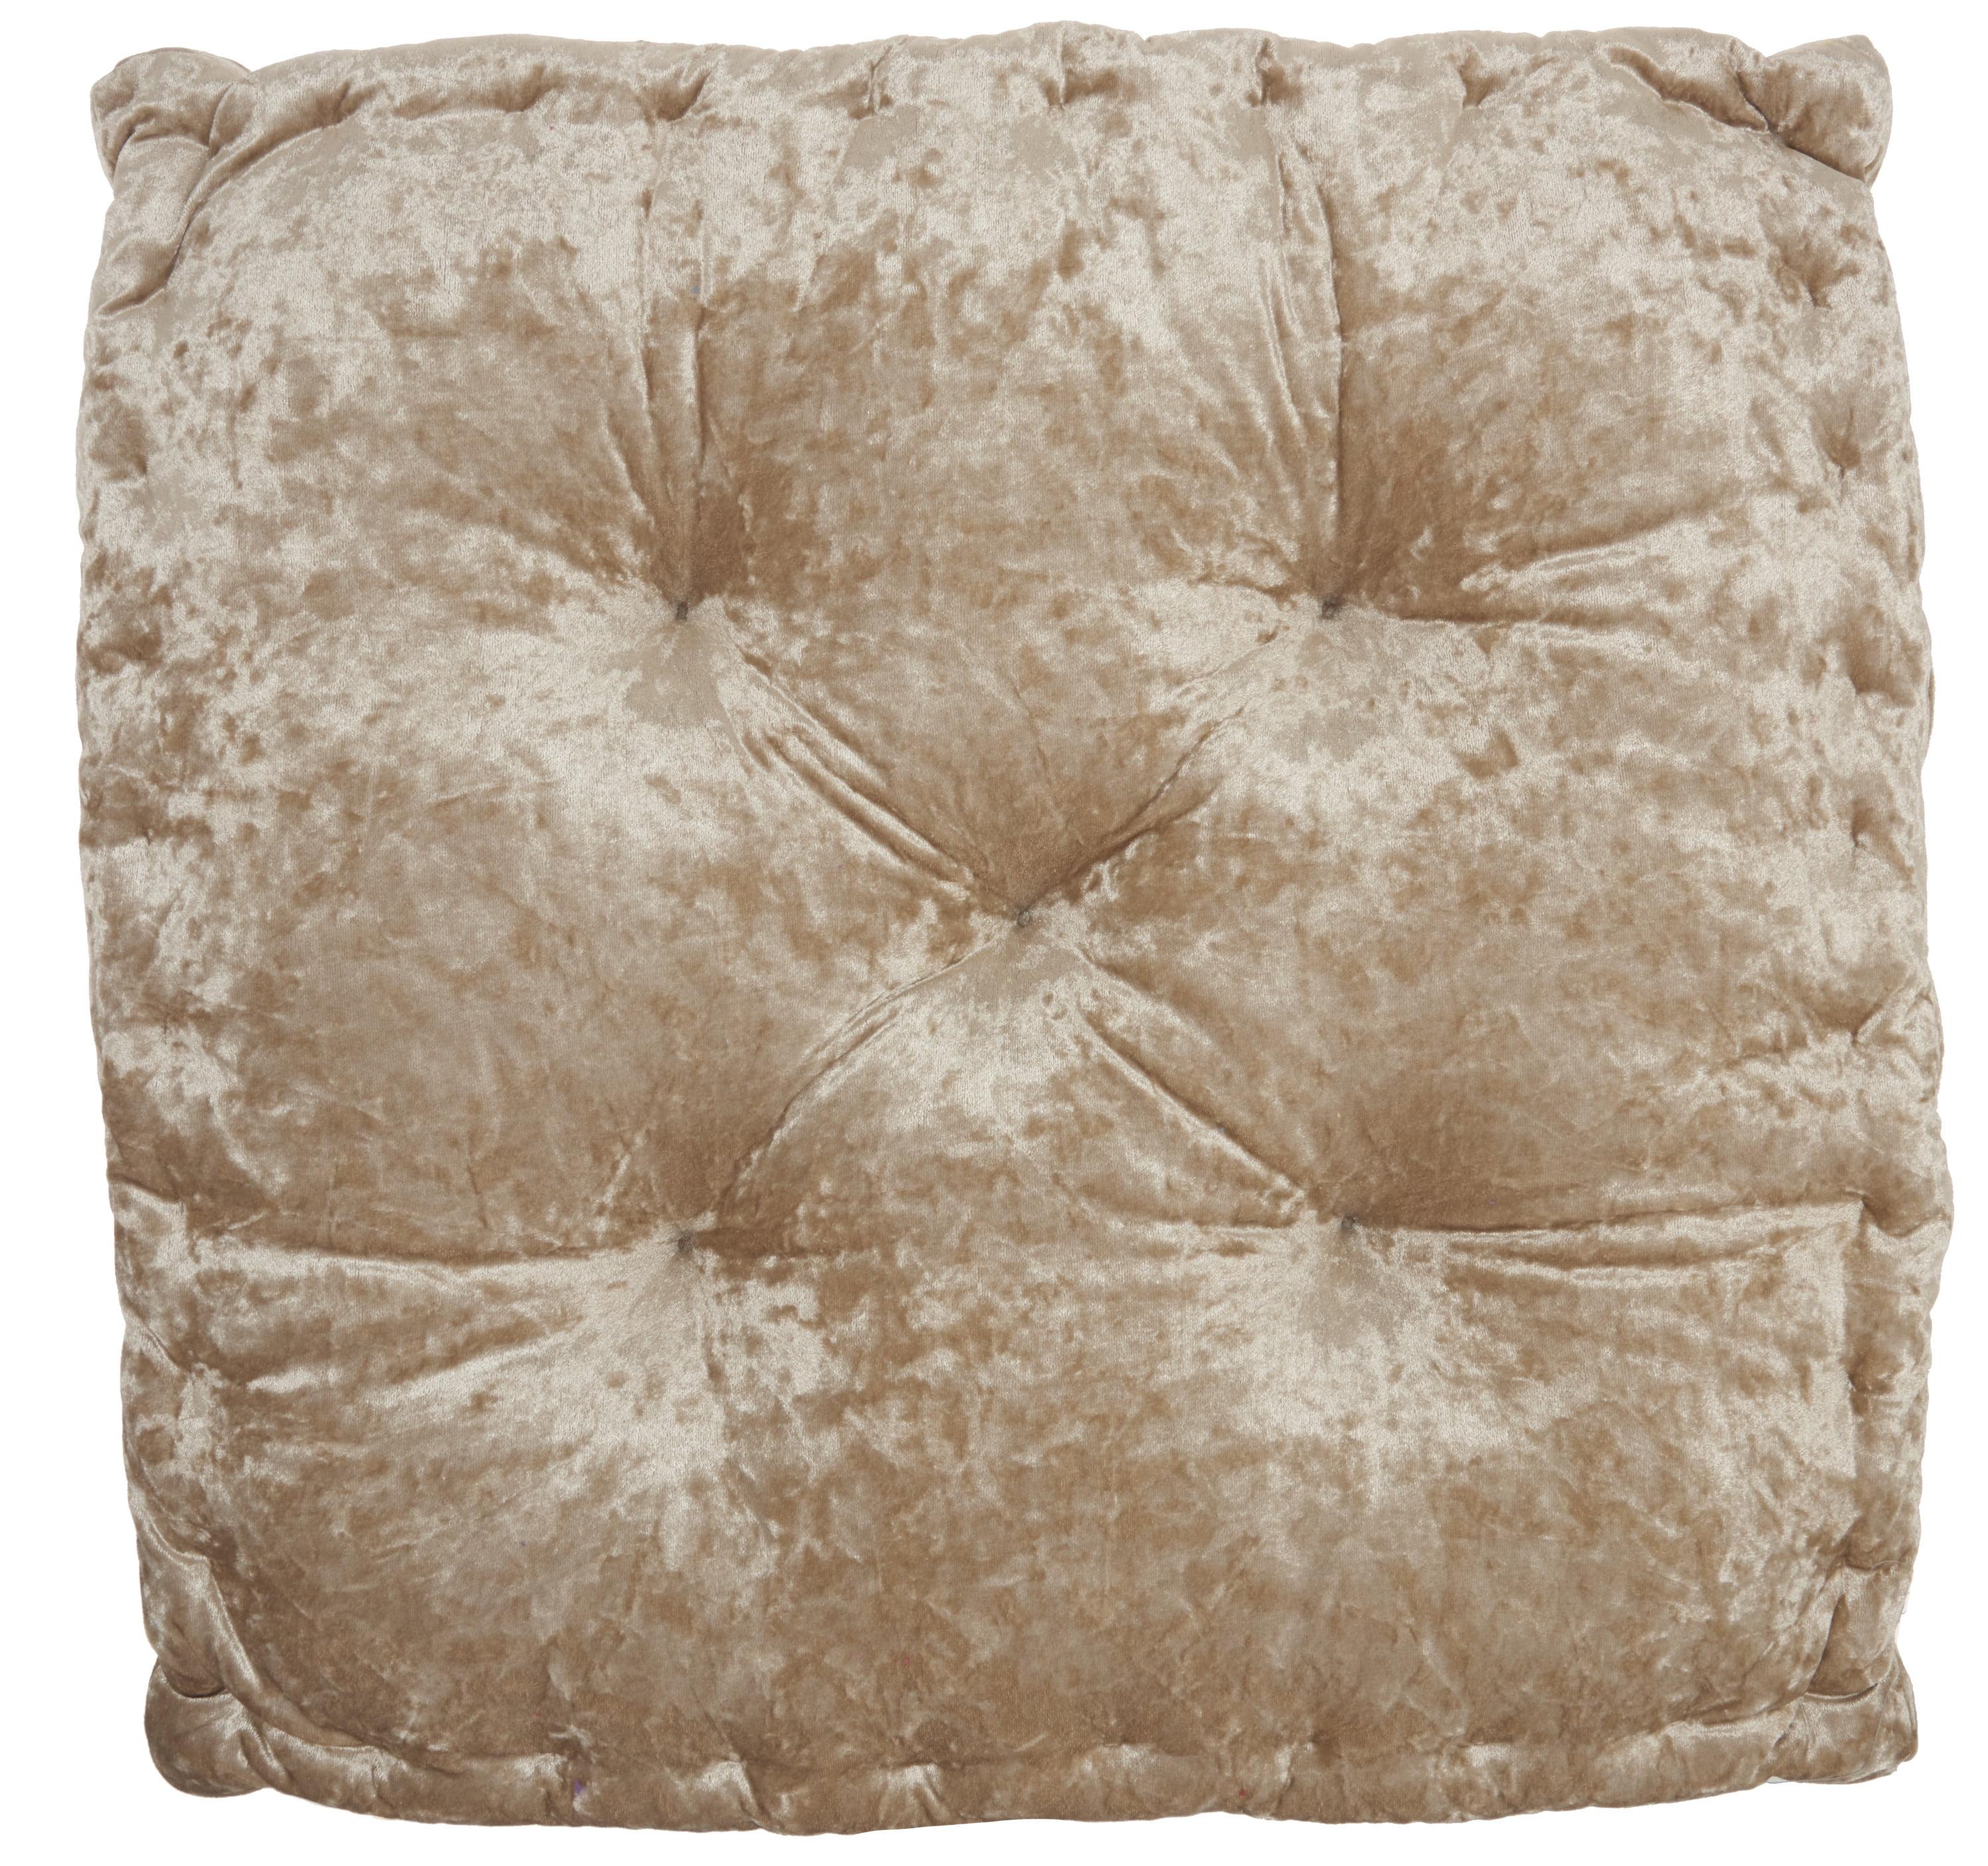 Plush Beige Tufted Square Floor Cushion Set 24" x 24"